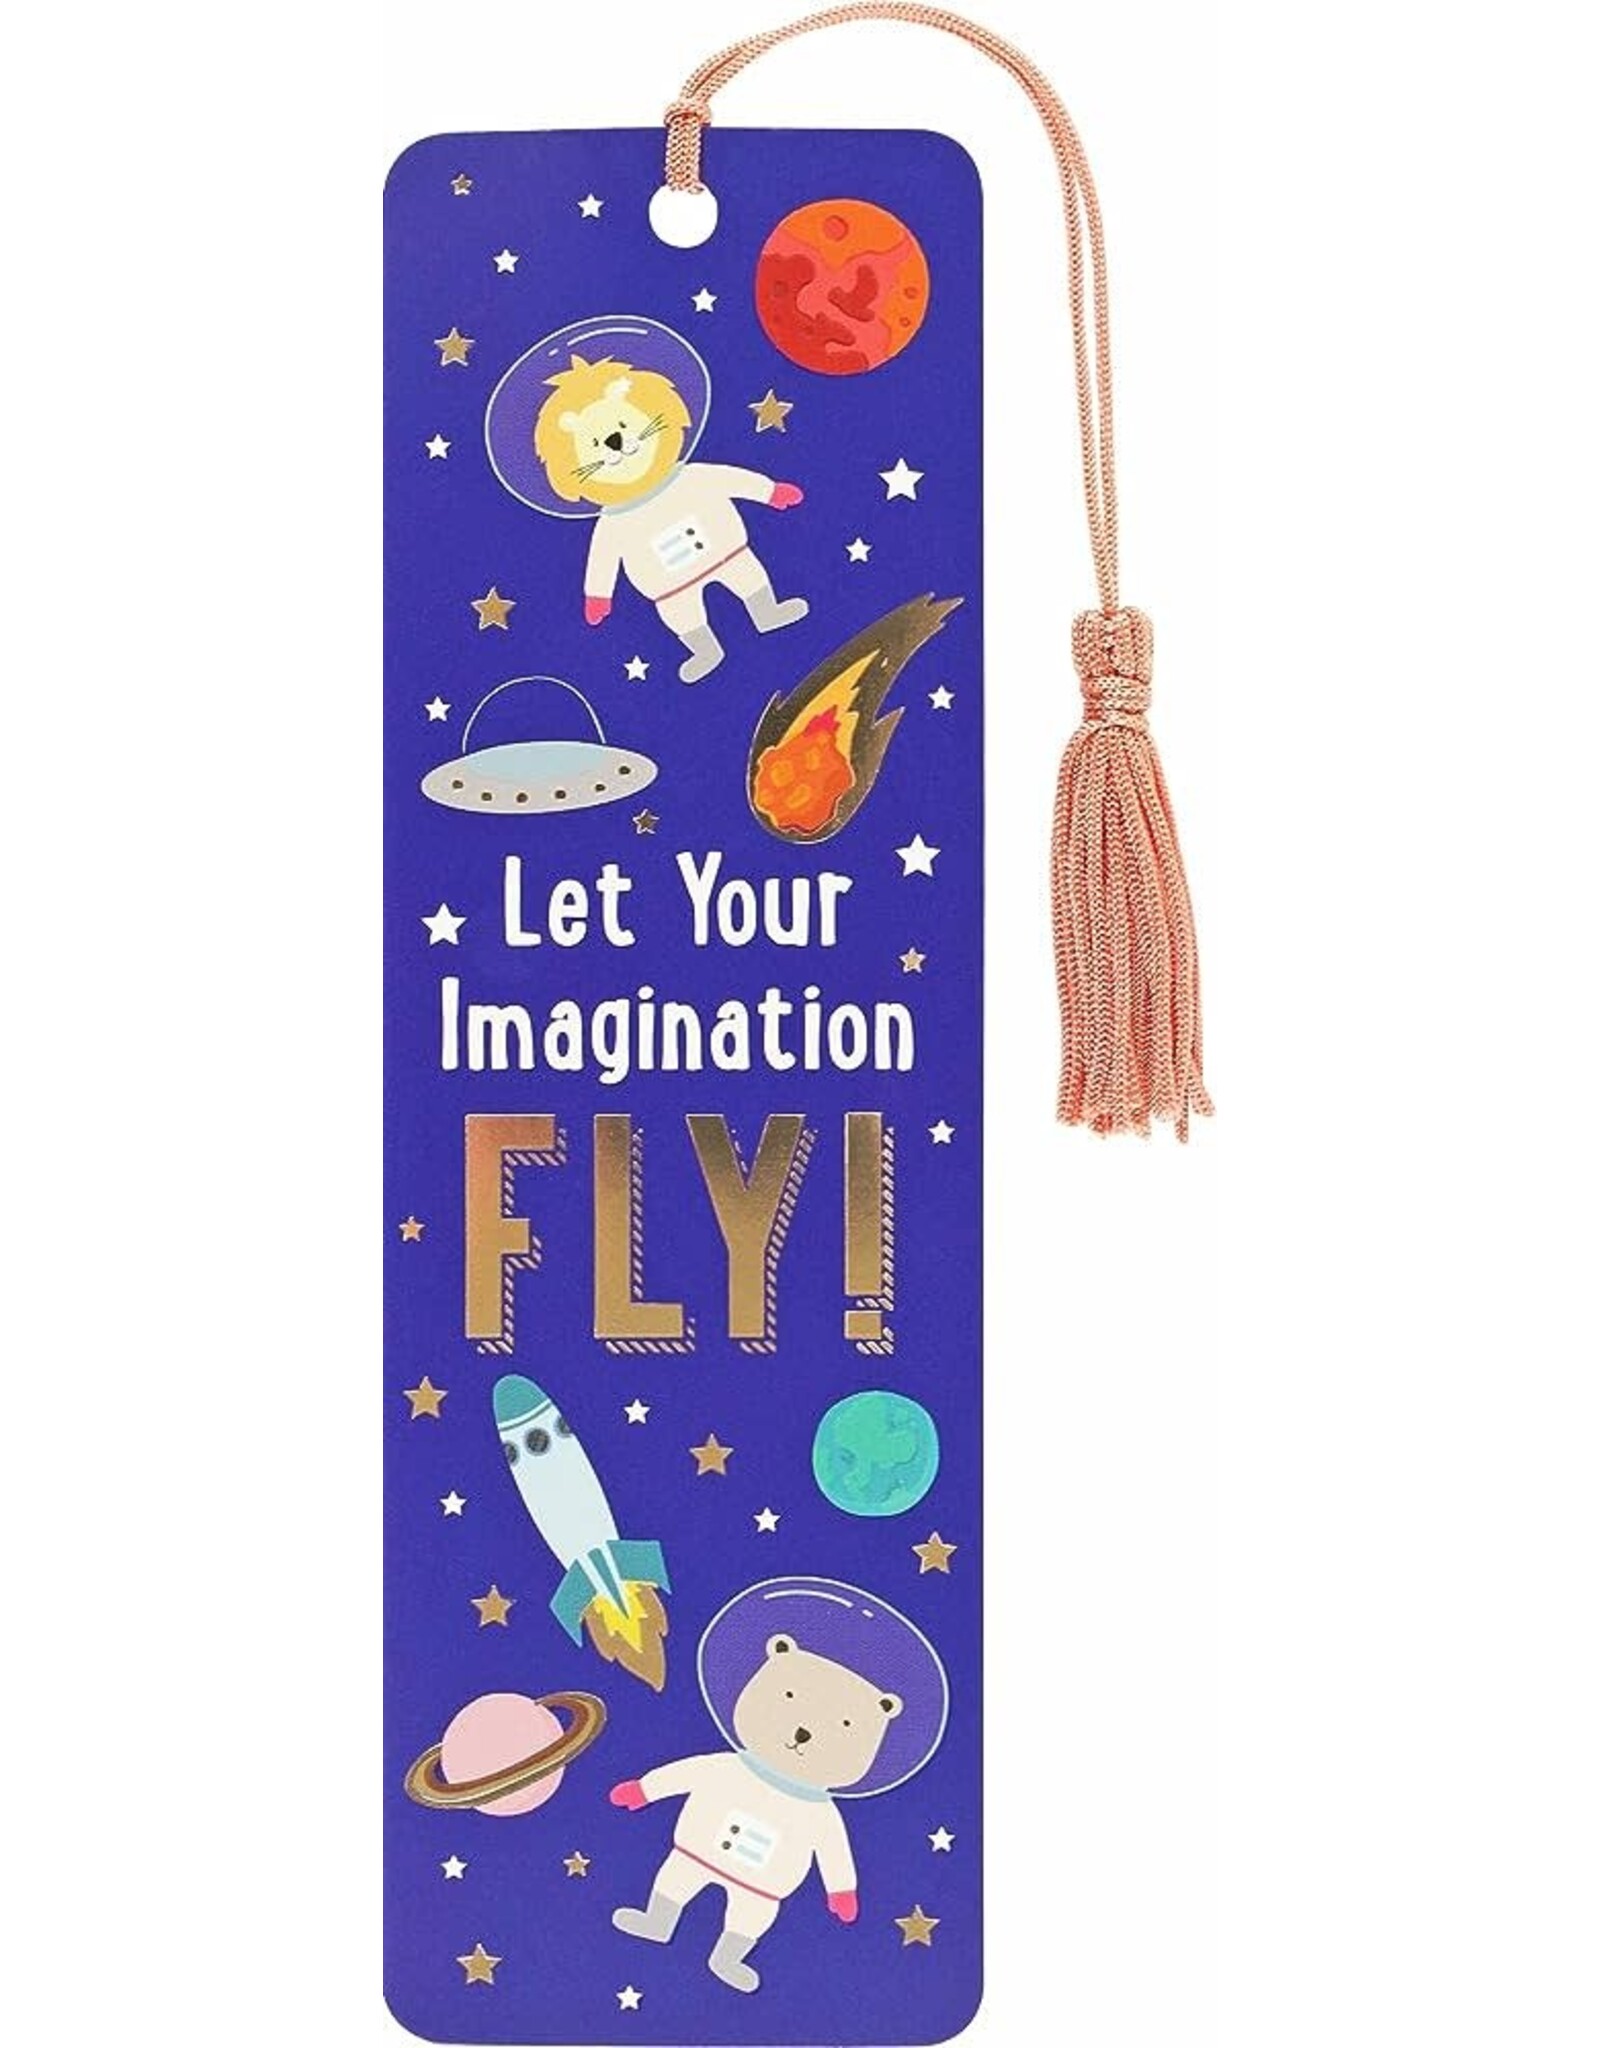 Peter Pauper Press Let Your Imagination Fly! Children's Bookmark